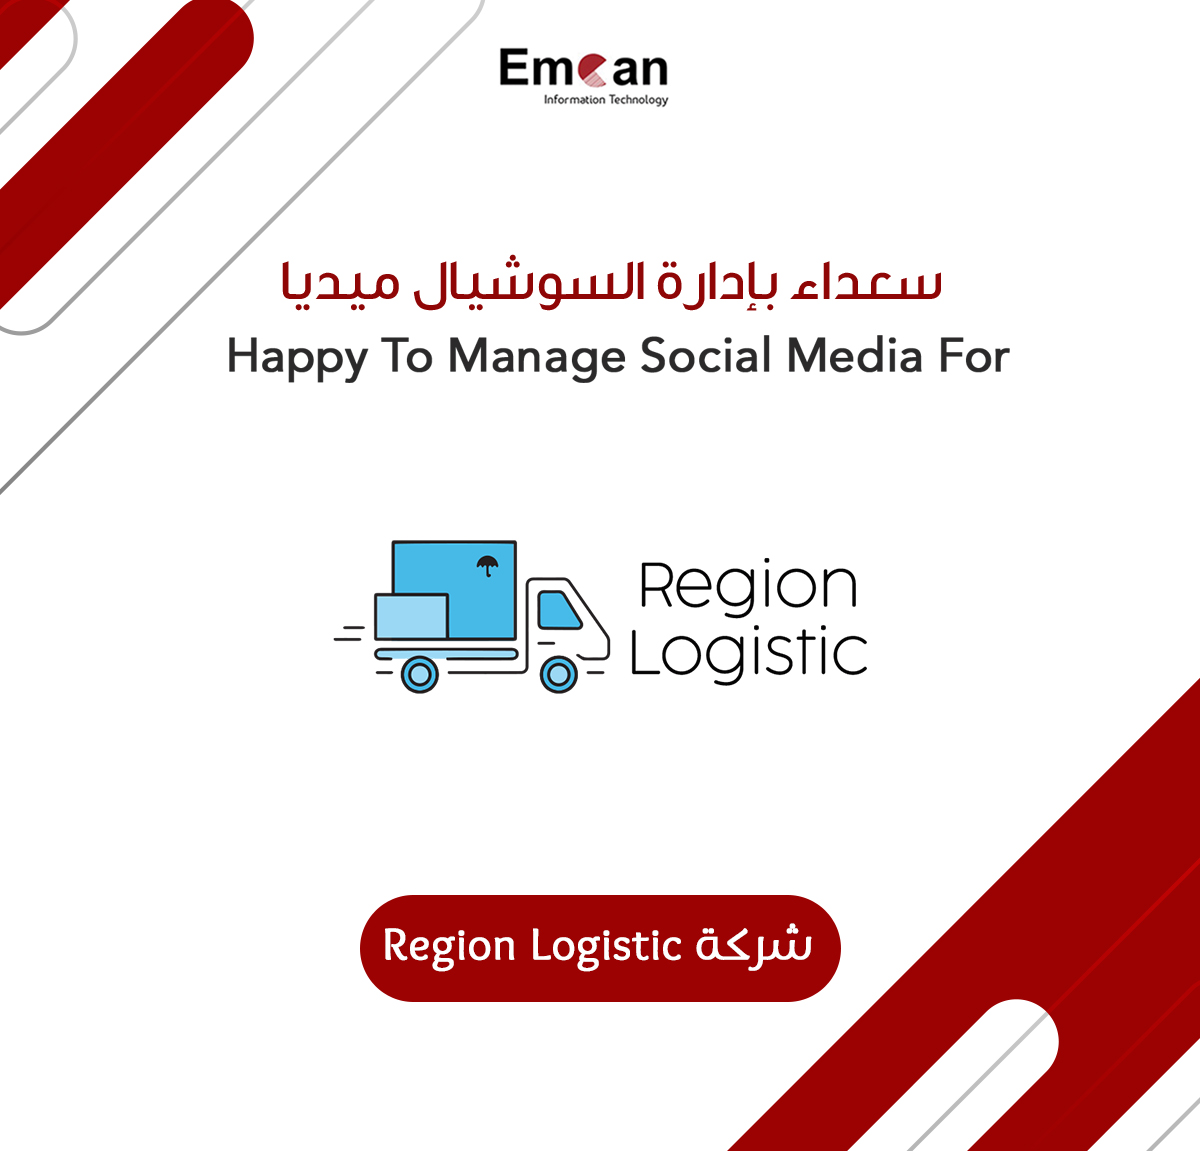 Region Logistic Company